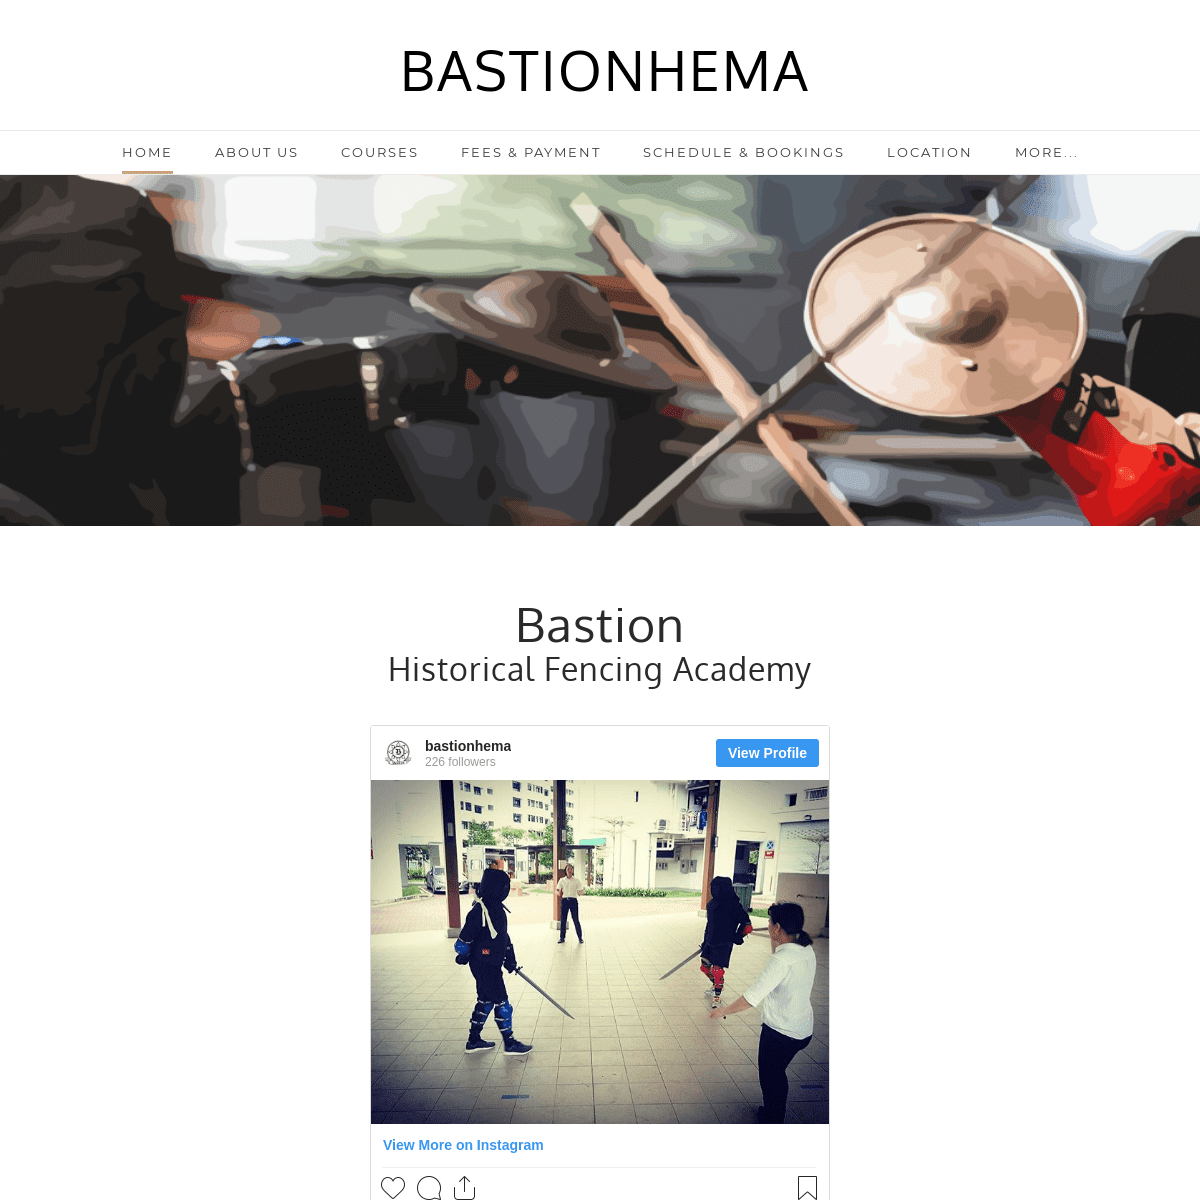 BASTIONHEMA - Historical Fencing Academy